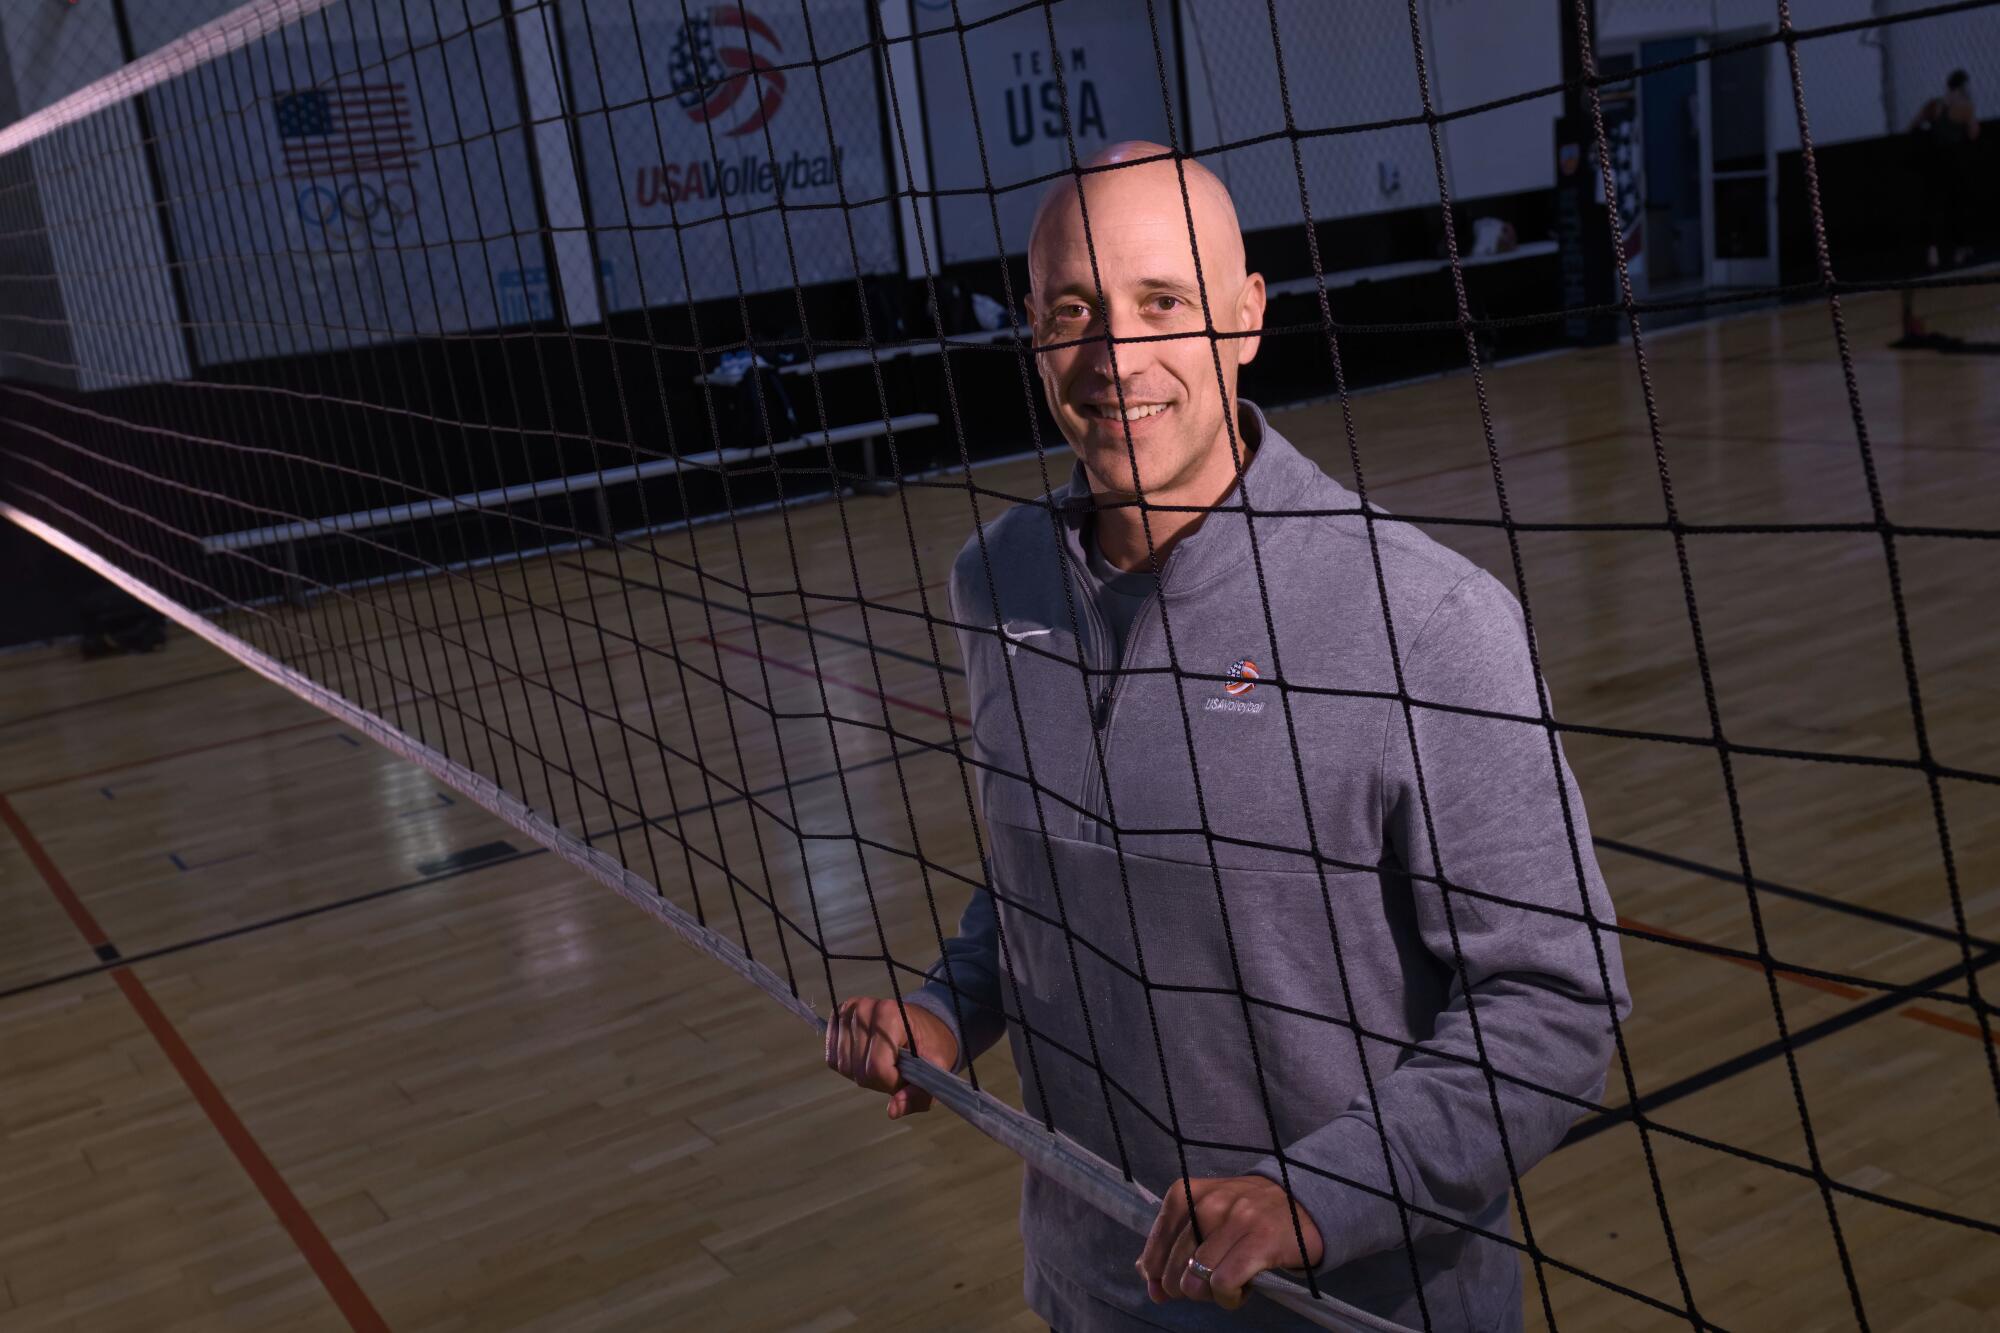 U.S. men's volleyball coach John Speraw stands behind a net at a team practice in Anaheim.